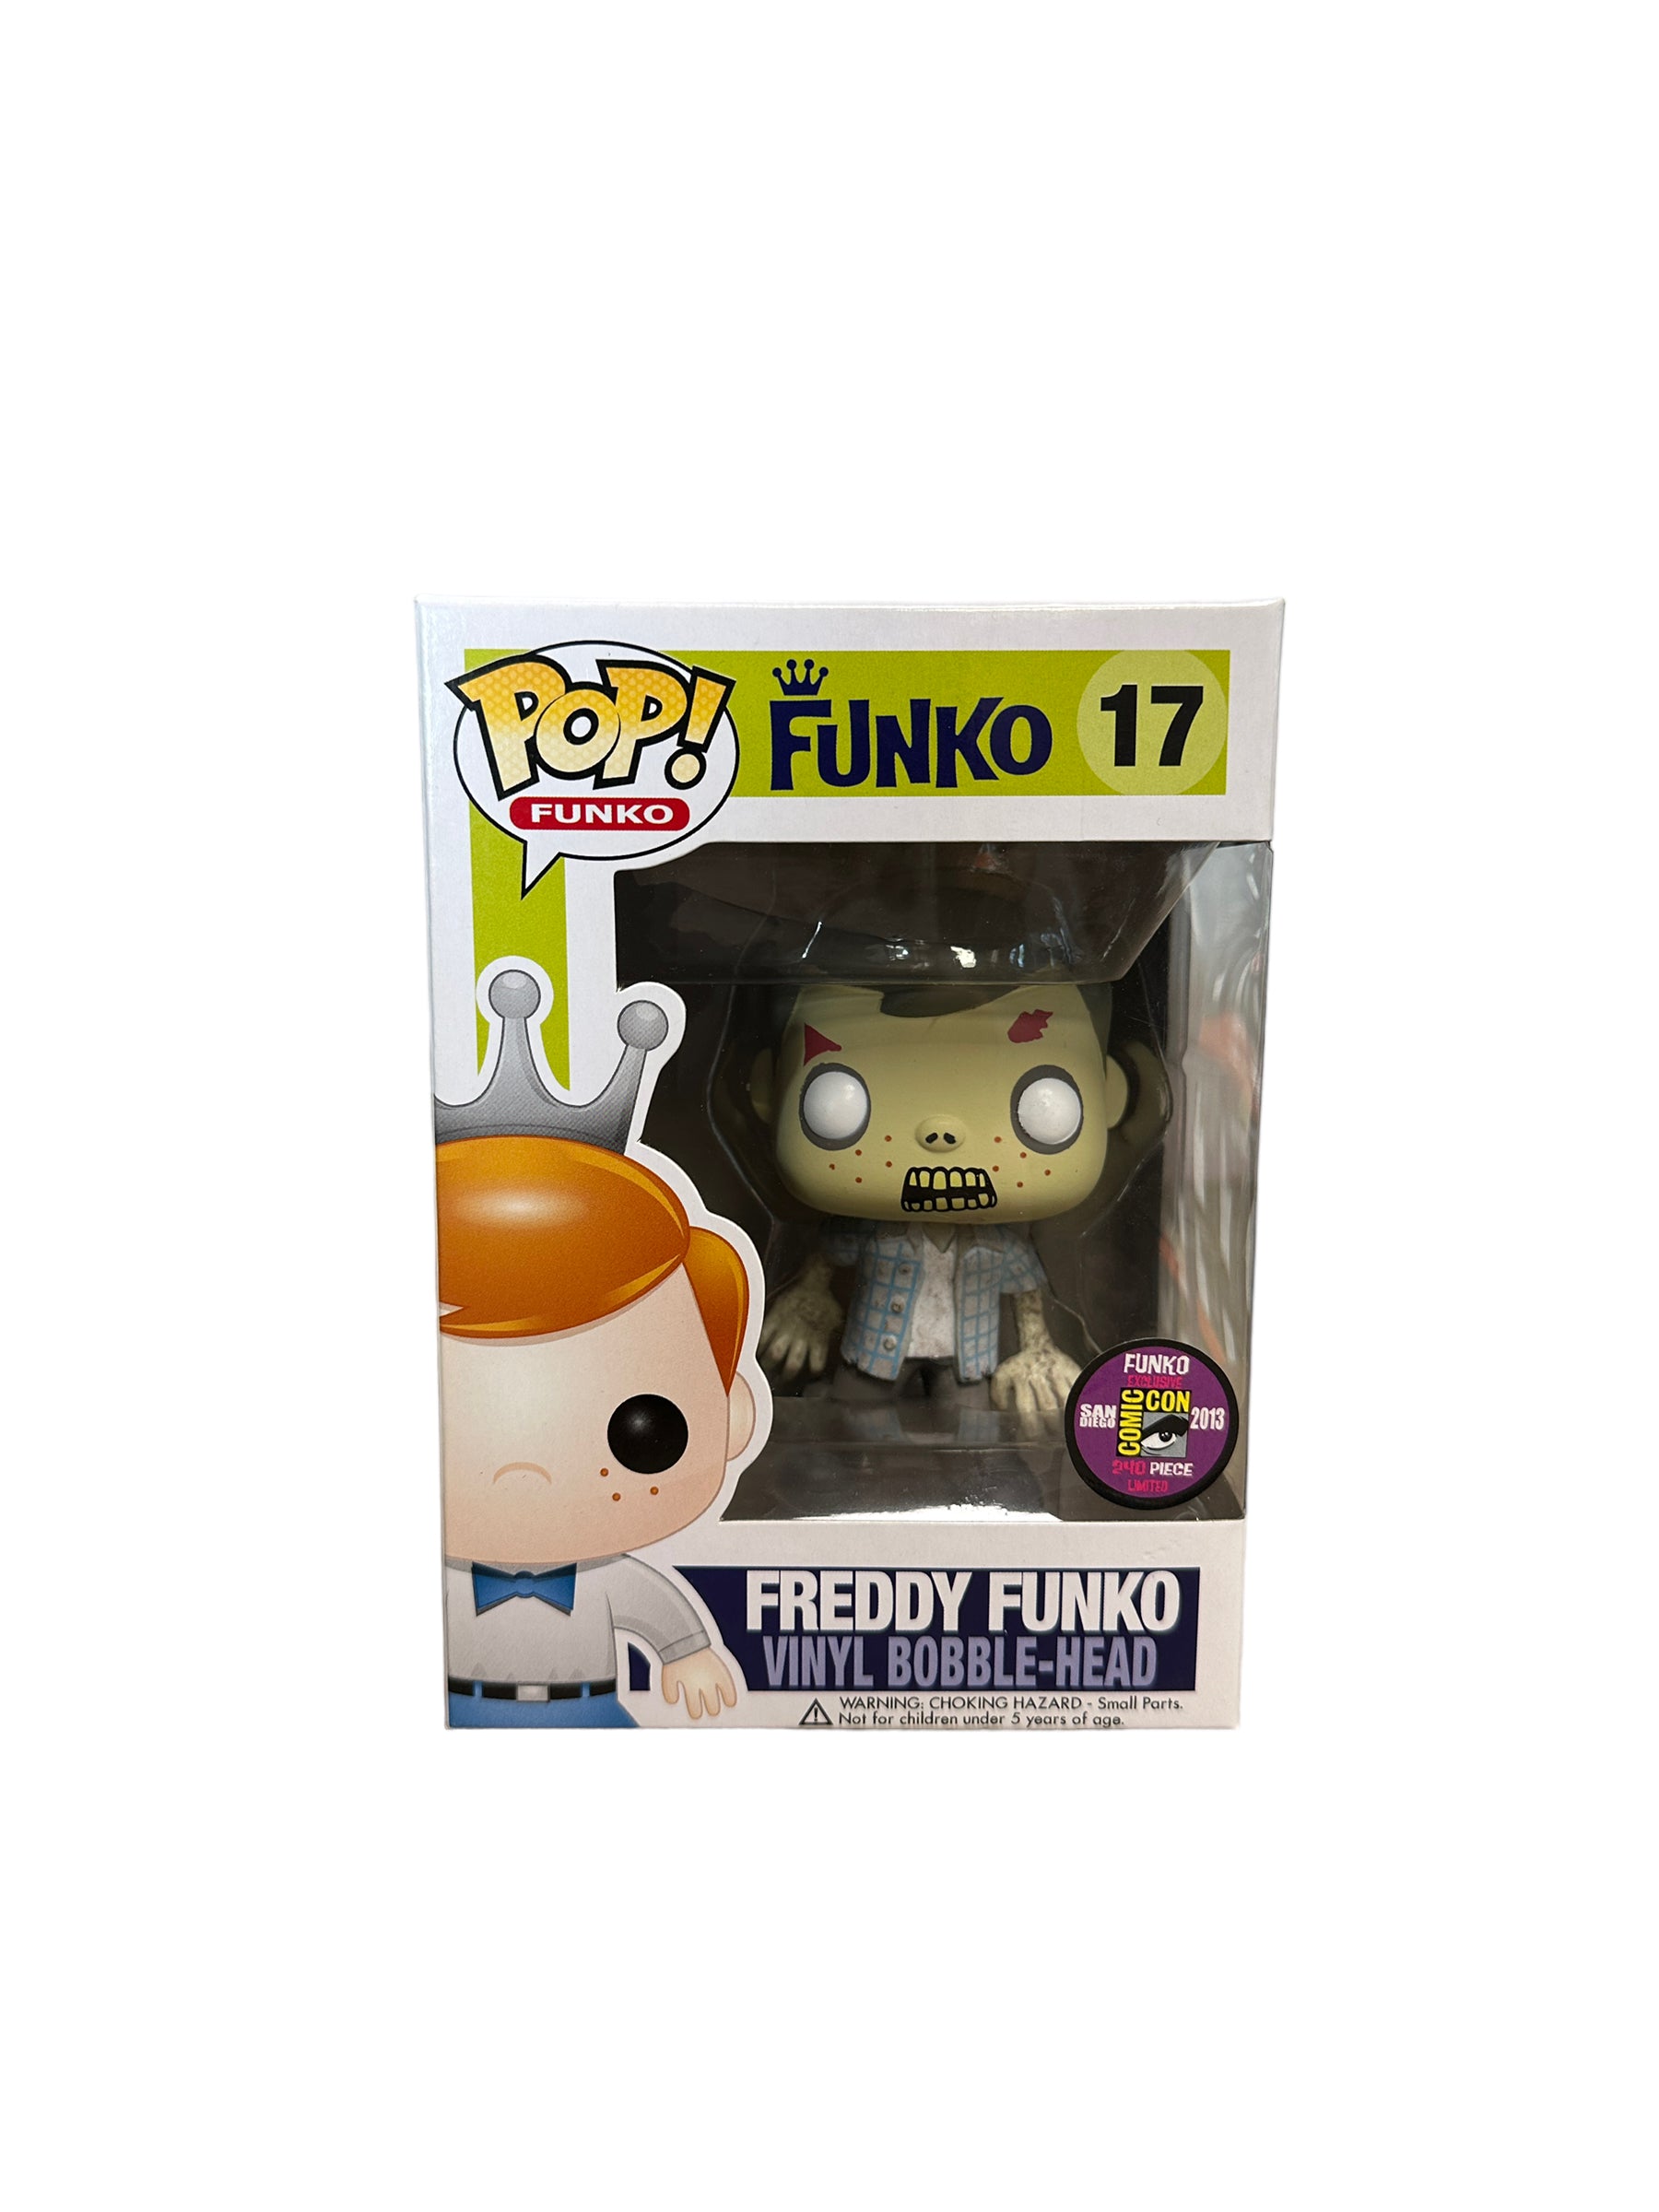 Freddy Funko as RV Walker #17 Funko Pop! - SDCC 2013 Exclusive LE240 Pcs - Condition 6.5/10